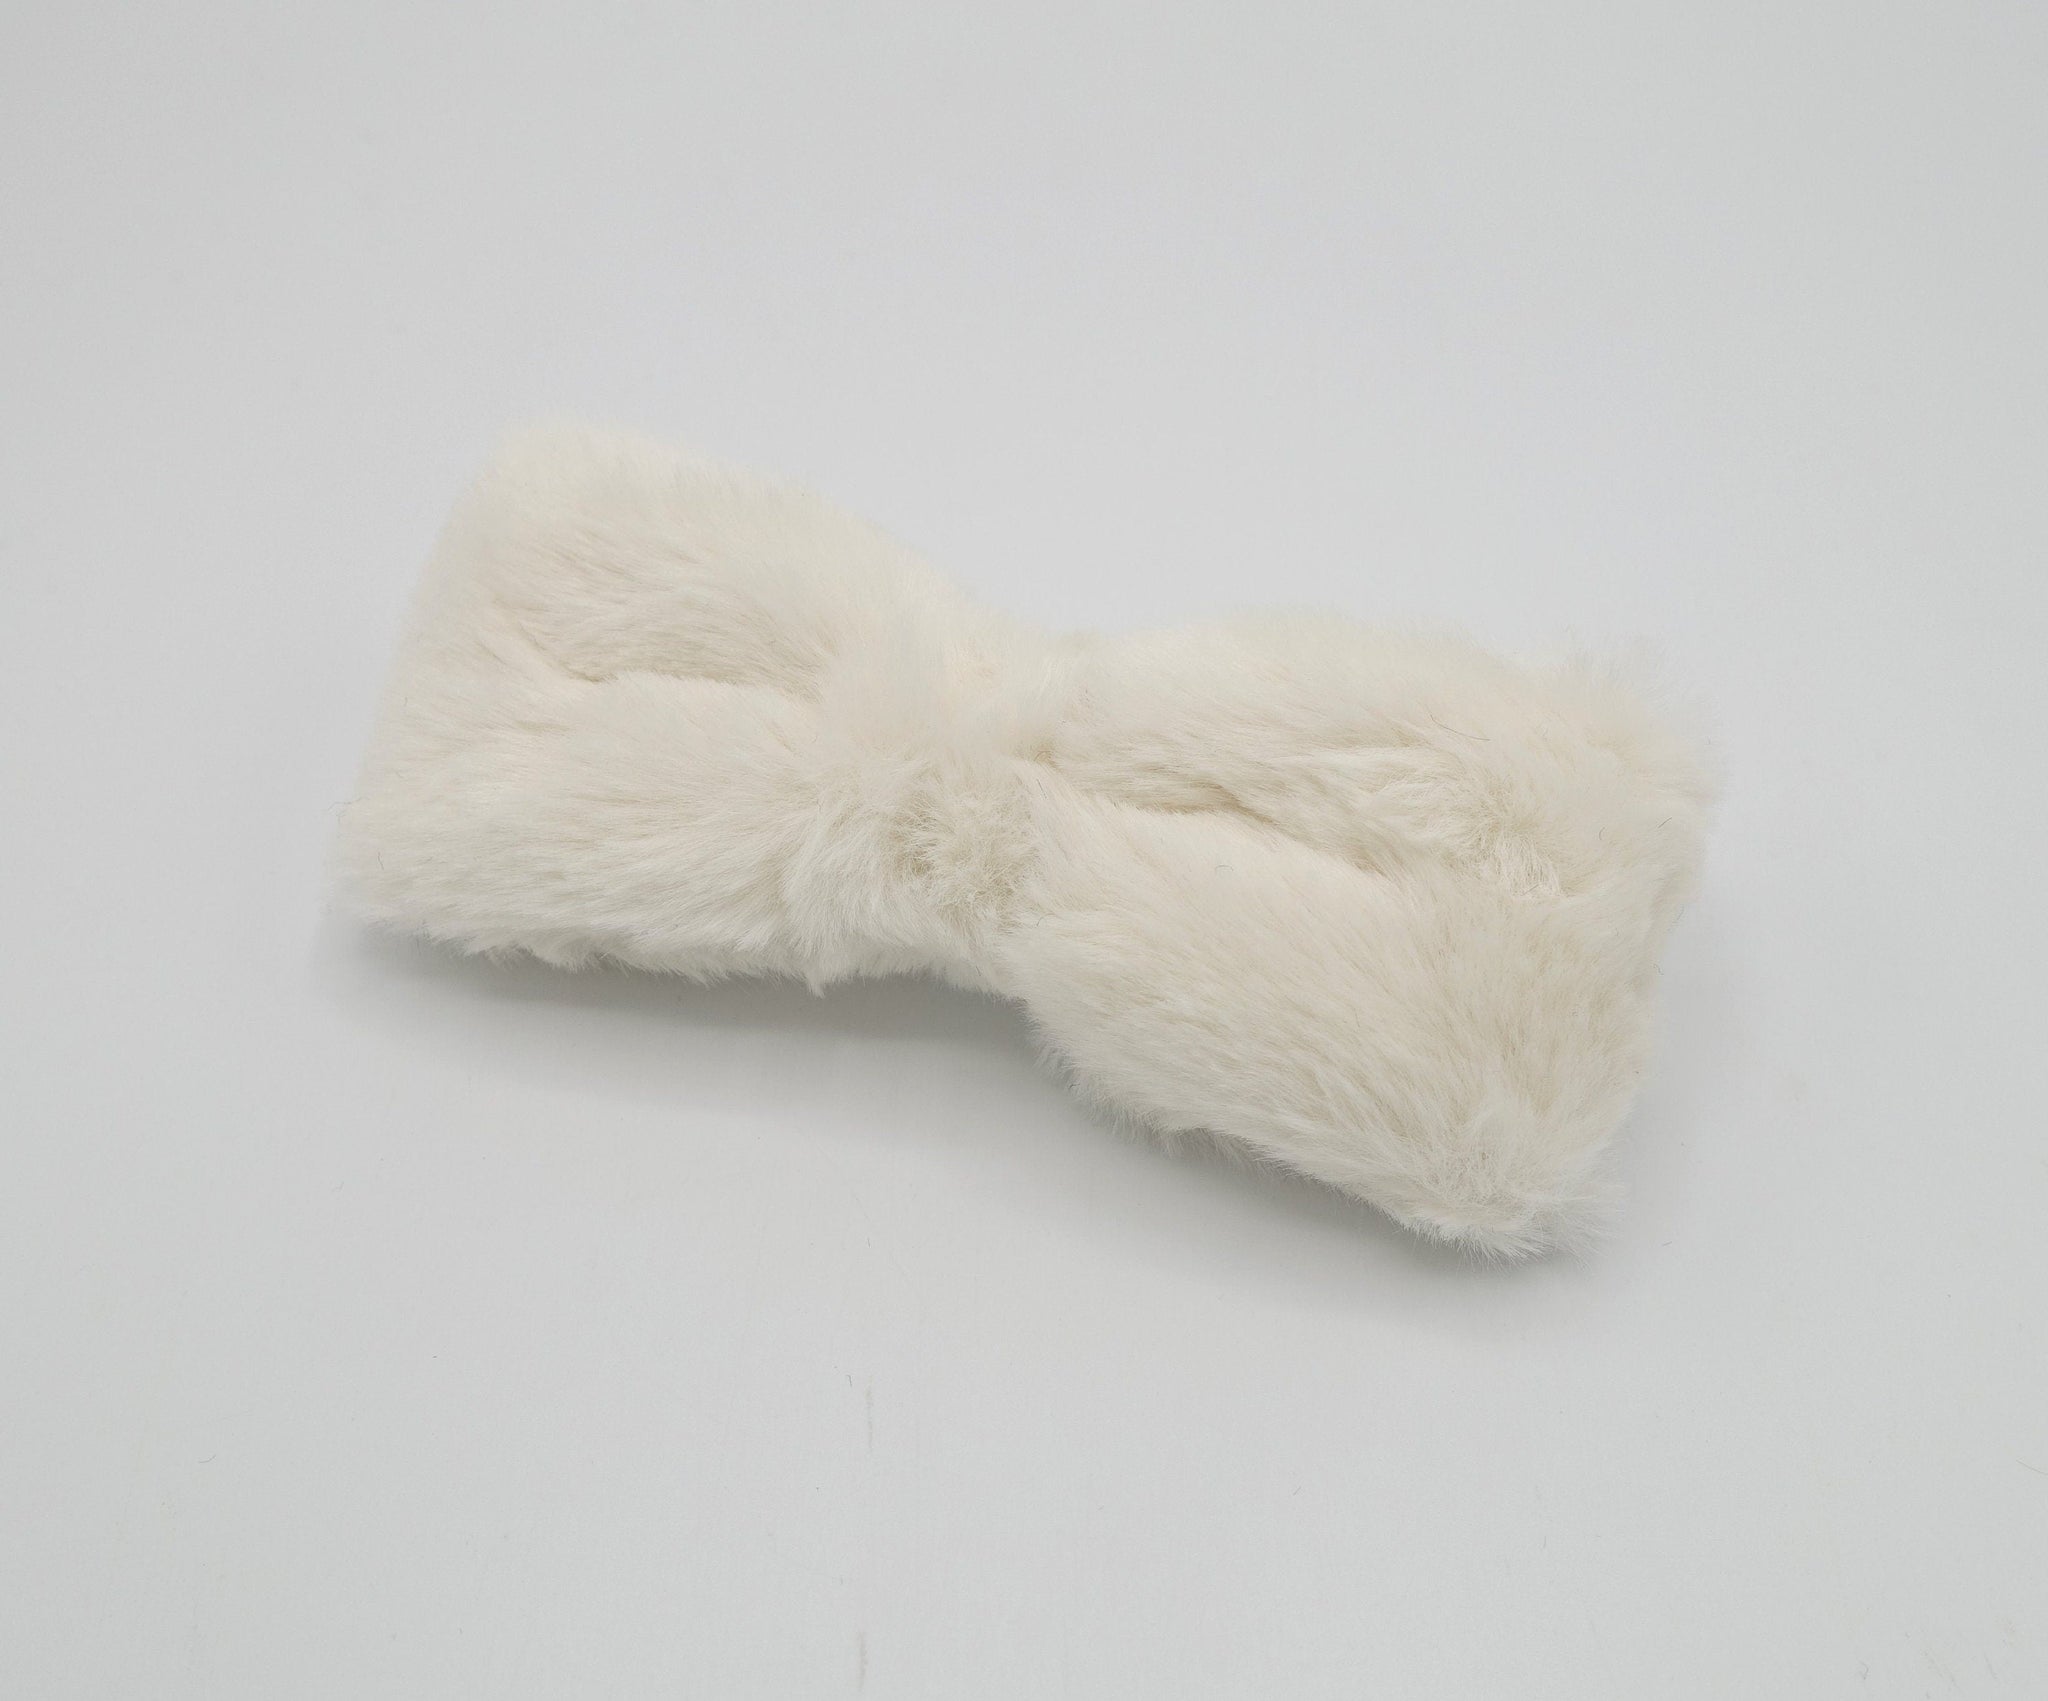 veryshine.com Barrette (Bow) fabric fur hair bow soft Winter hair accessory for women